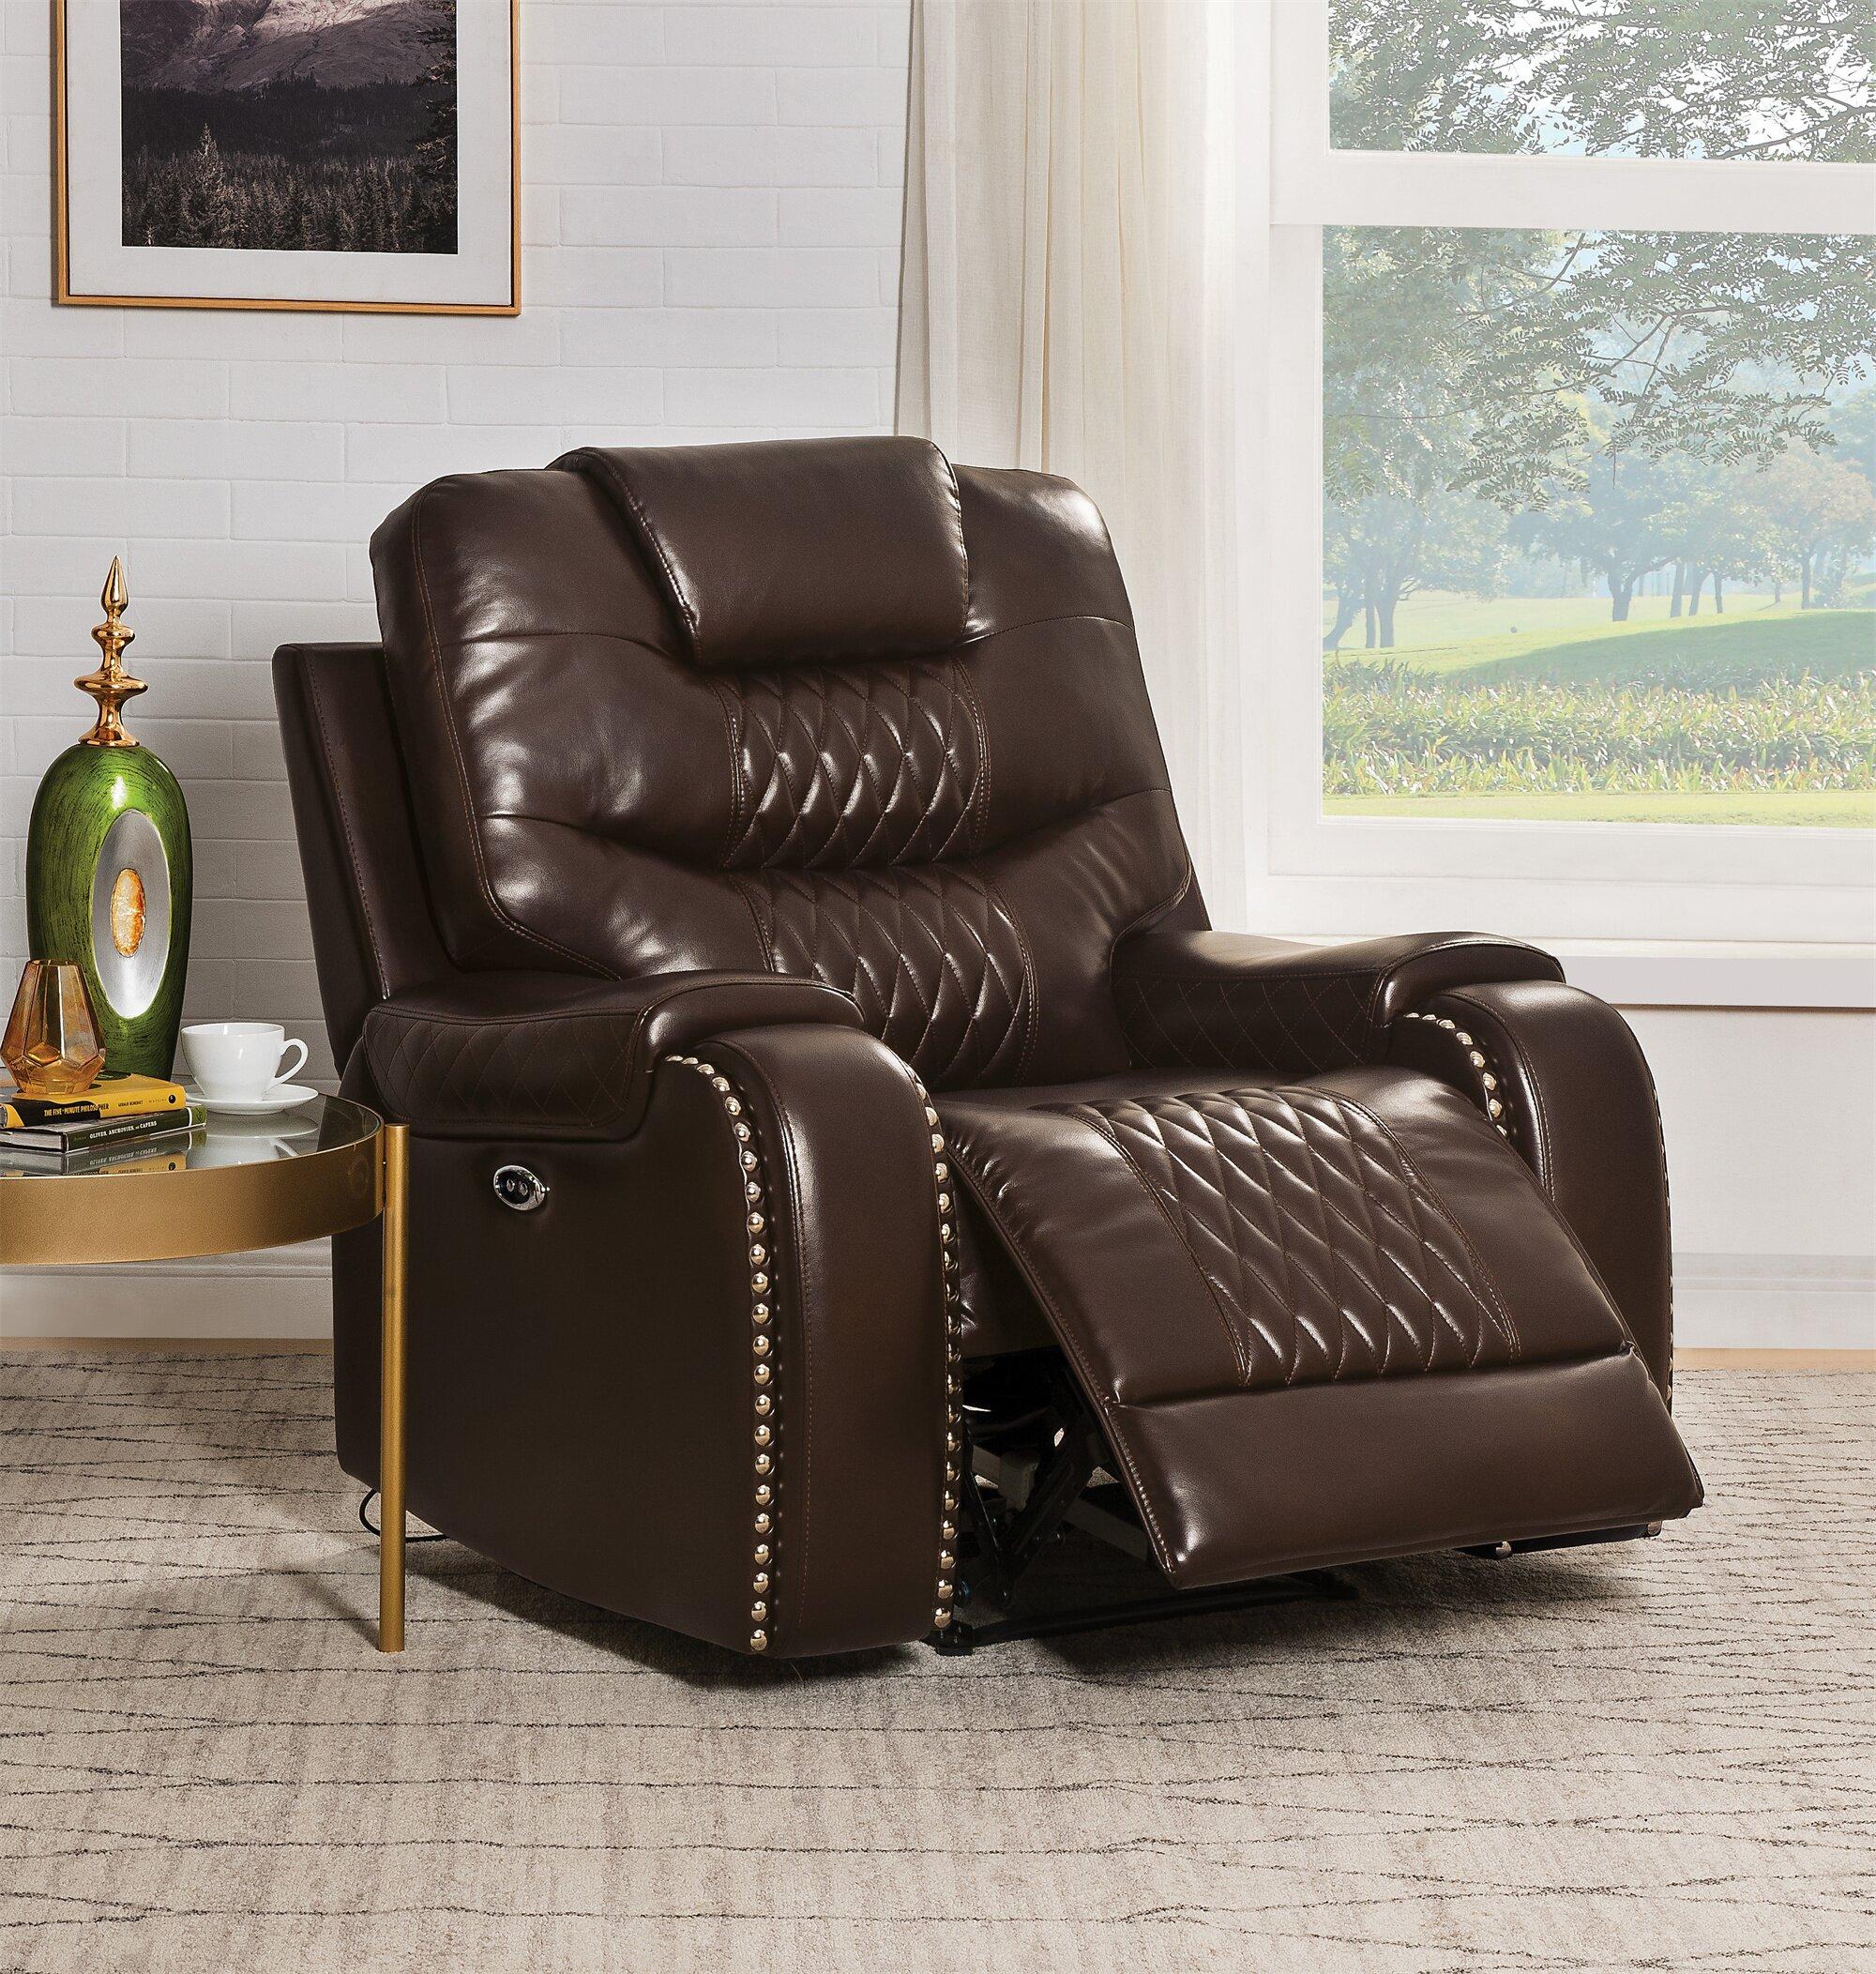 

    
Acme Furniture Braylon Recliner Brown 55417
